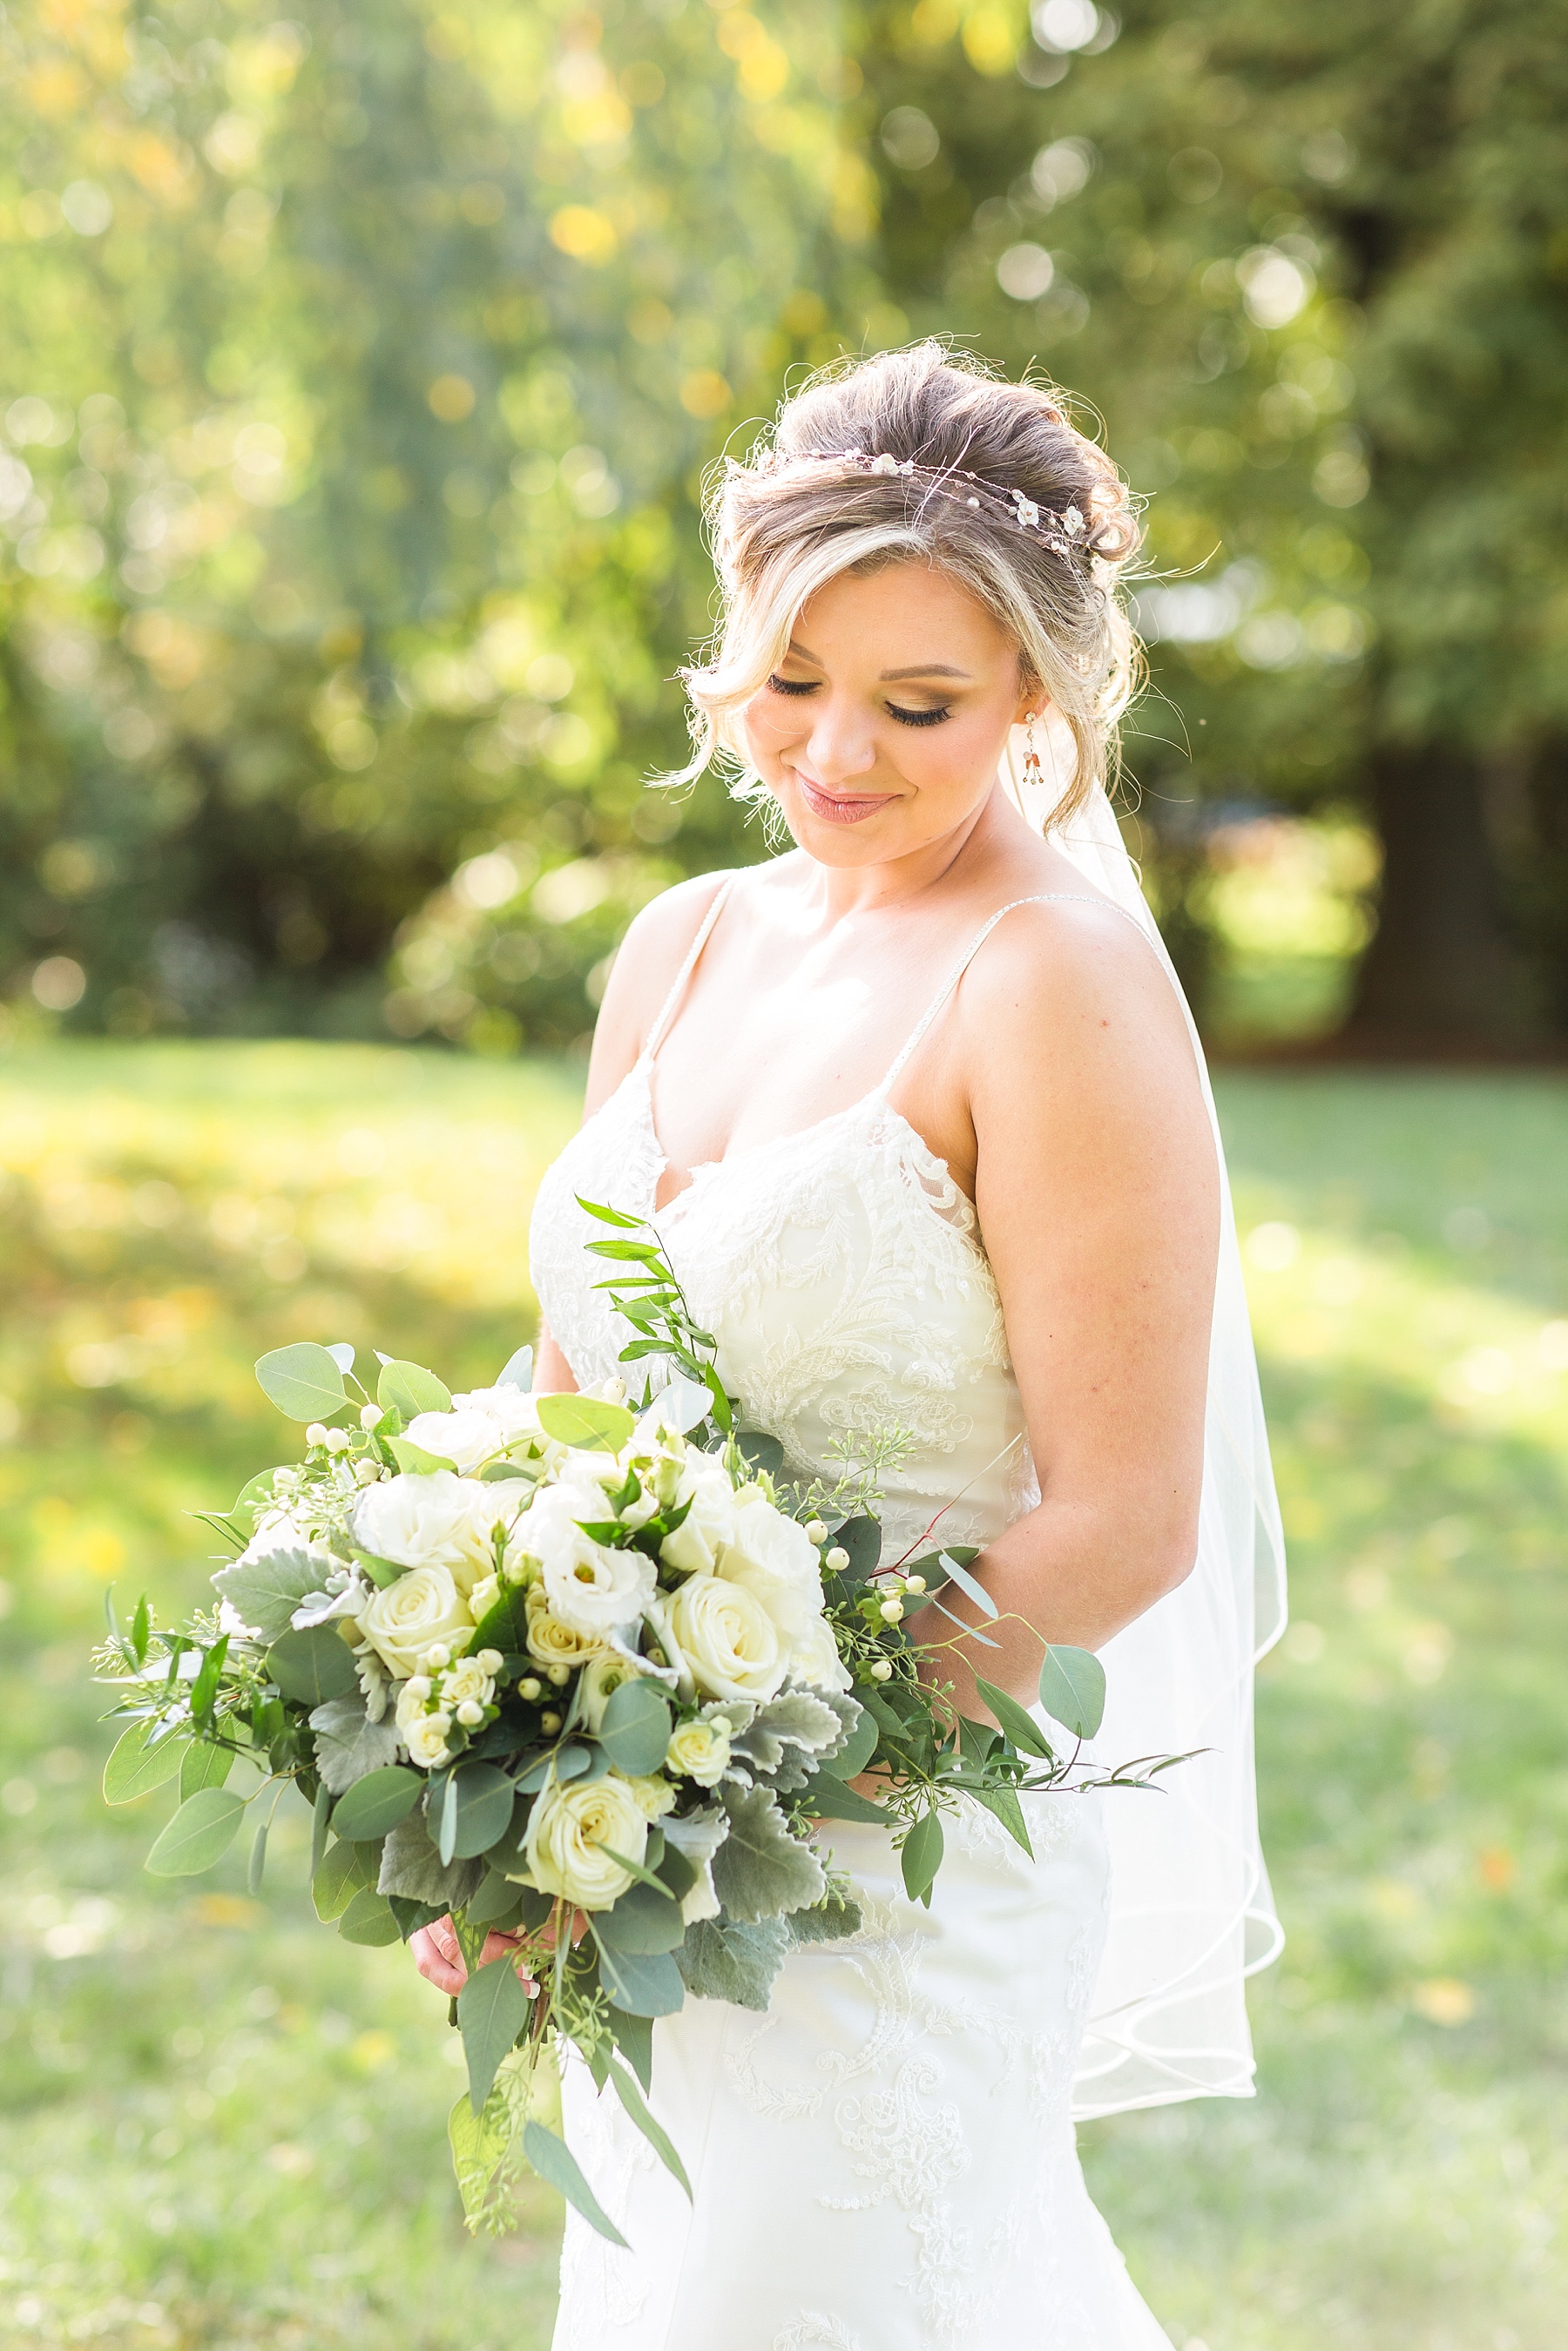 Alexandra Mandato Photography photographs bride with ivory bouquet